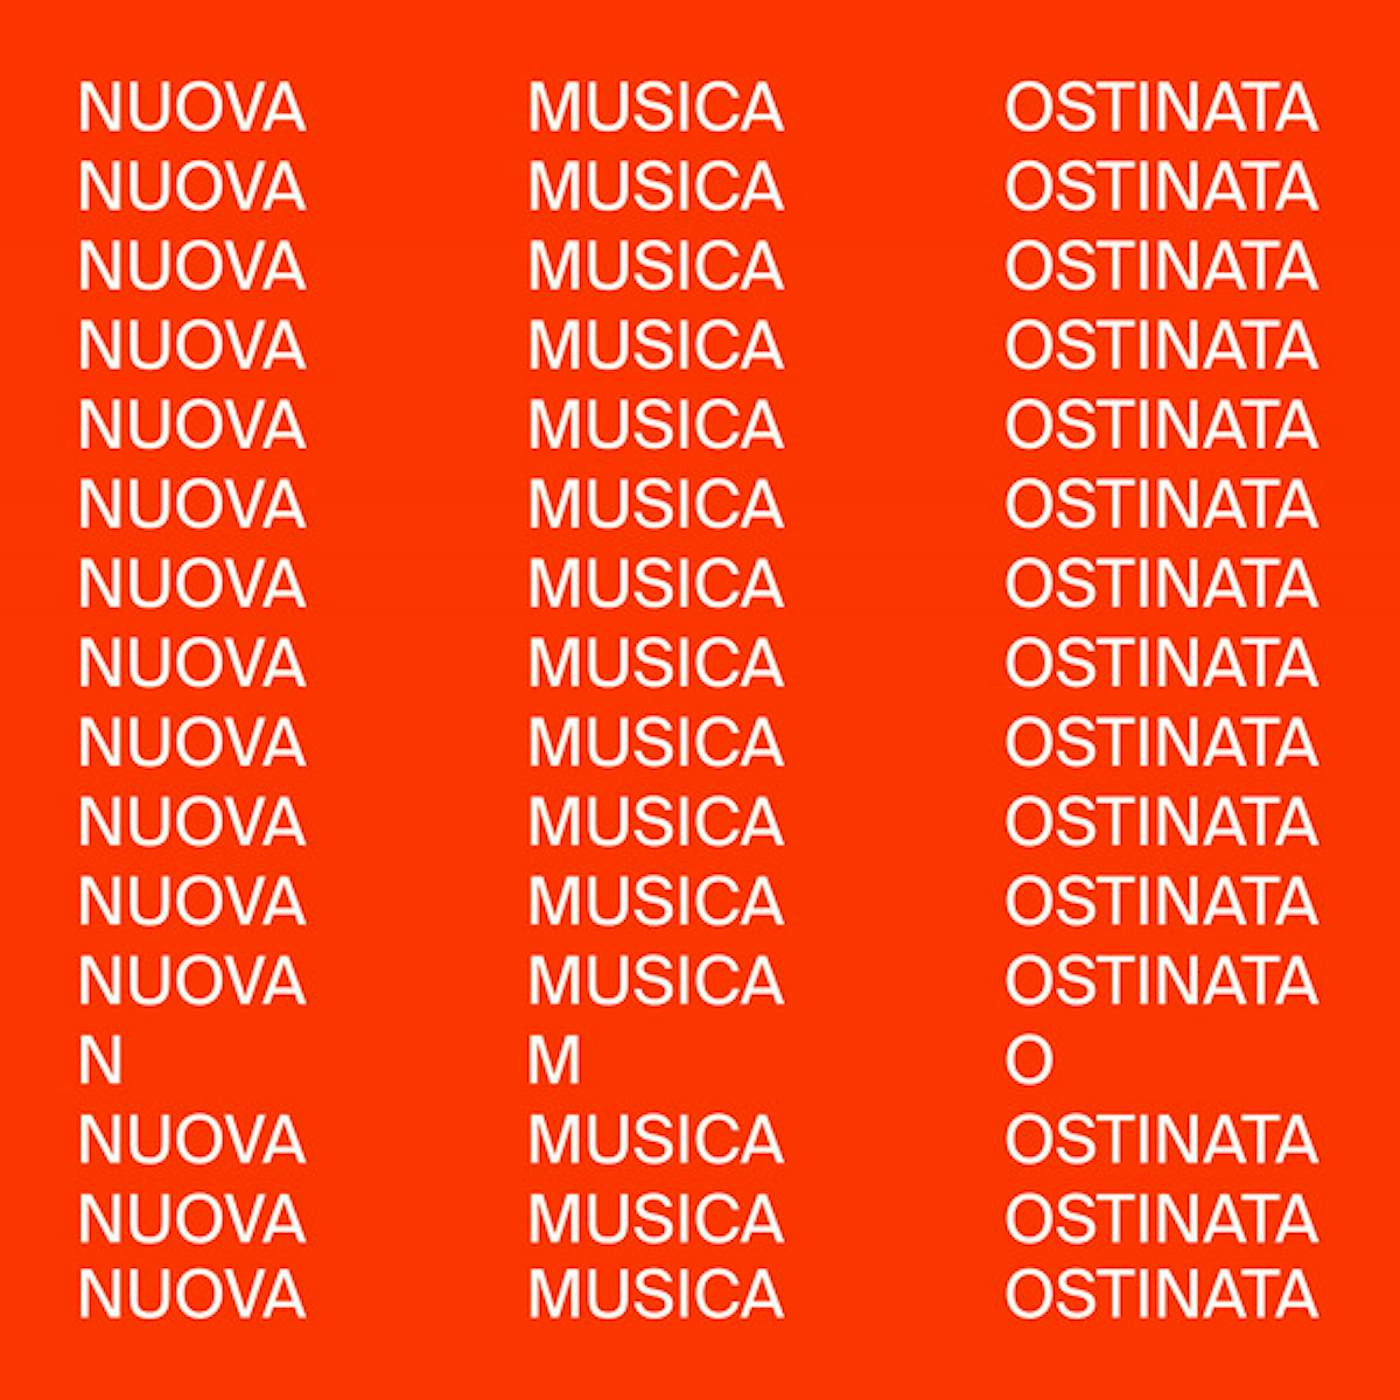 M|O|O|N Nuova Musica Ostinata Vinyl Record